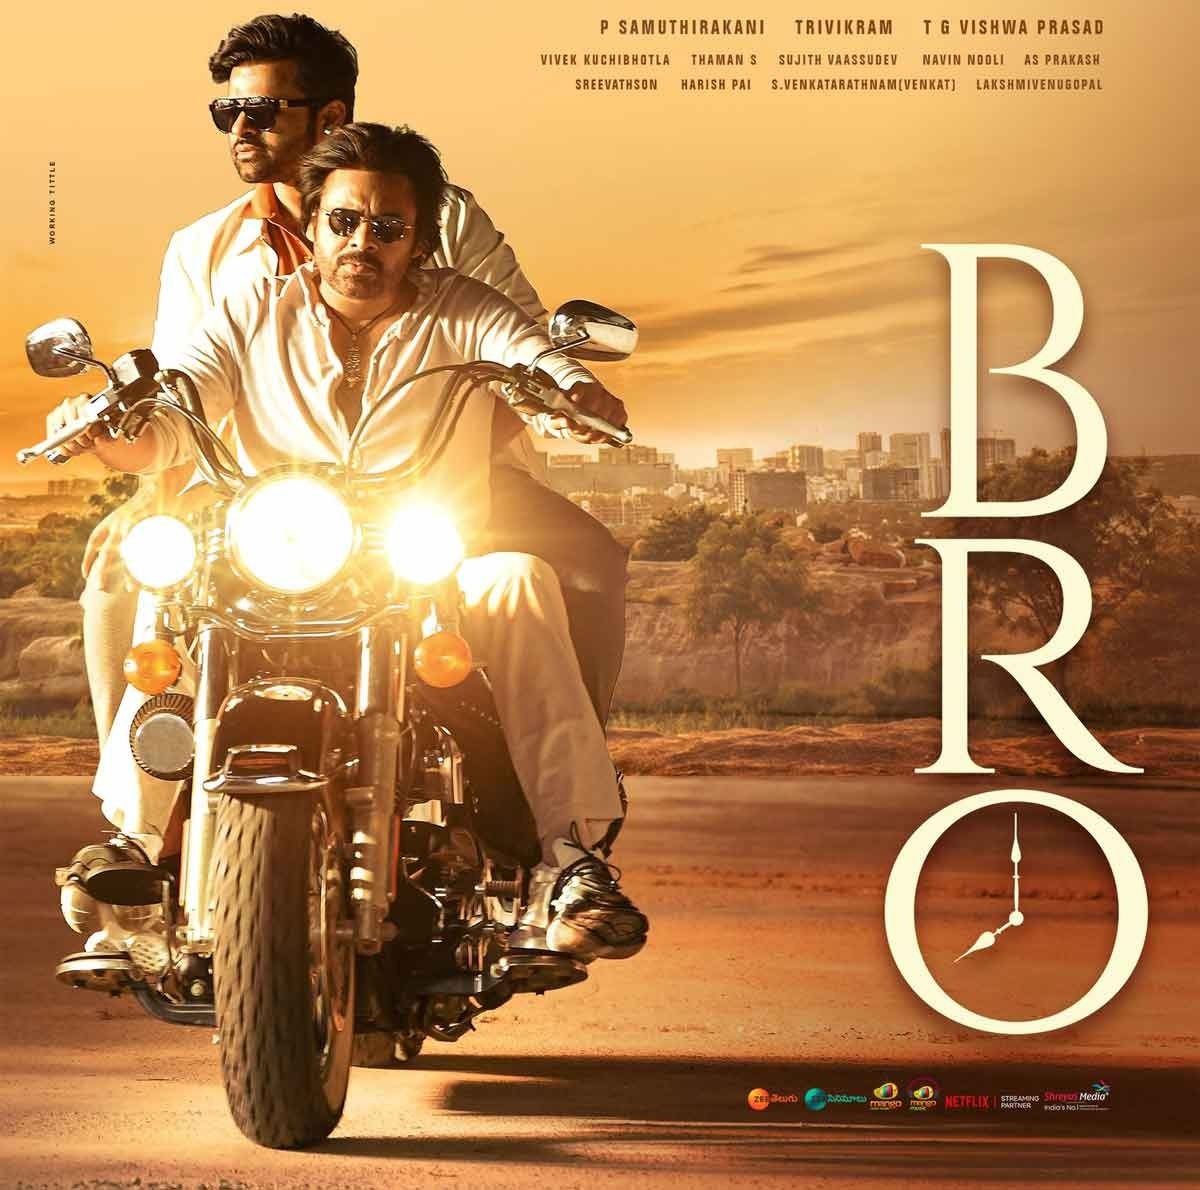 Bro review. Bro Tamil movie review, story, rating